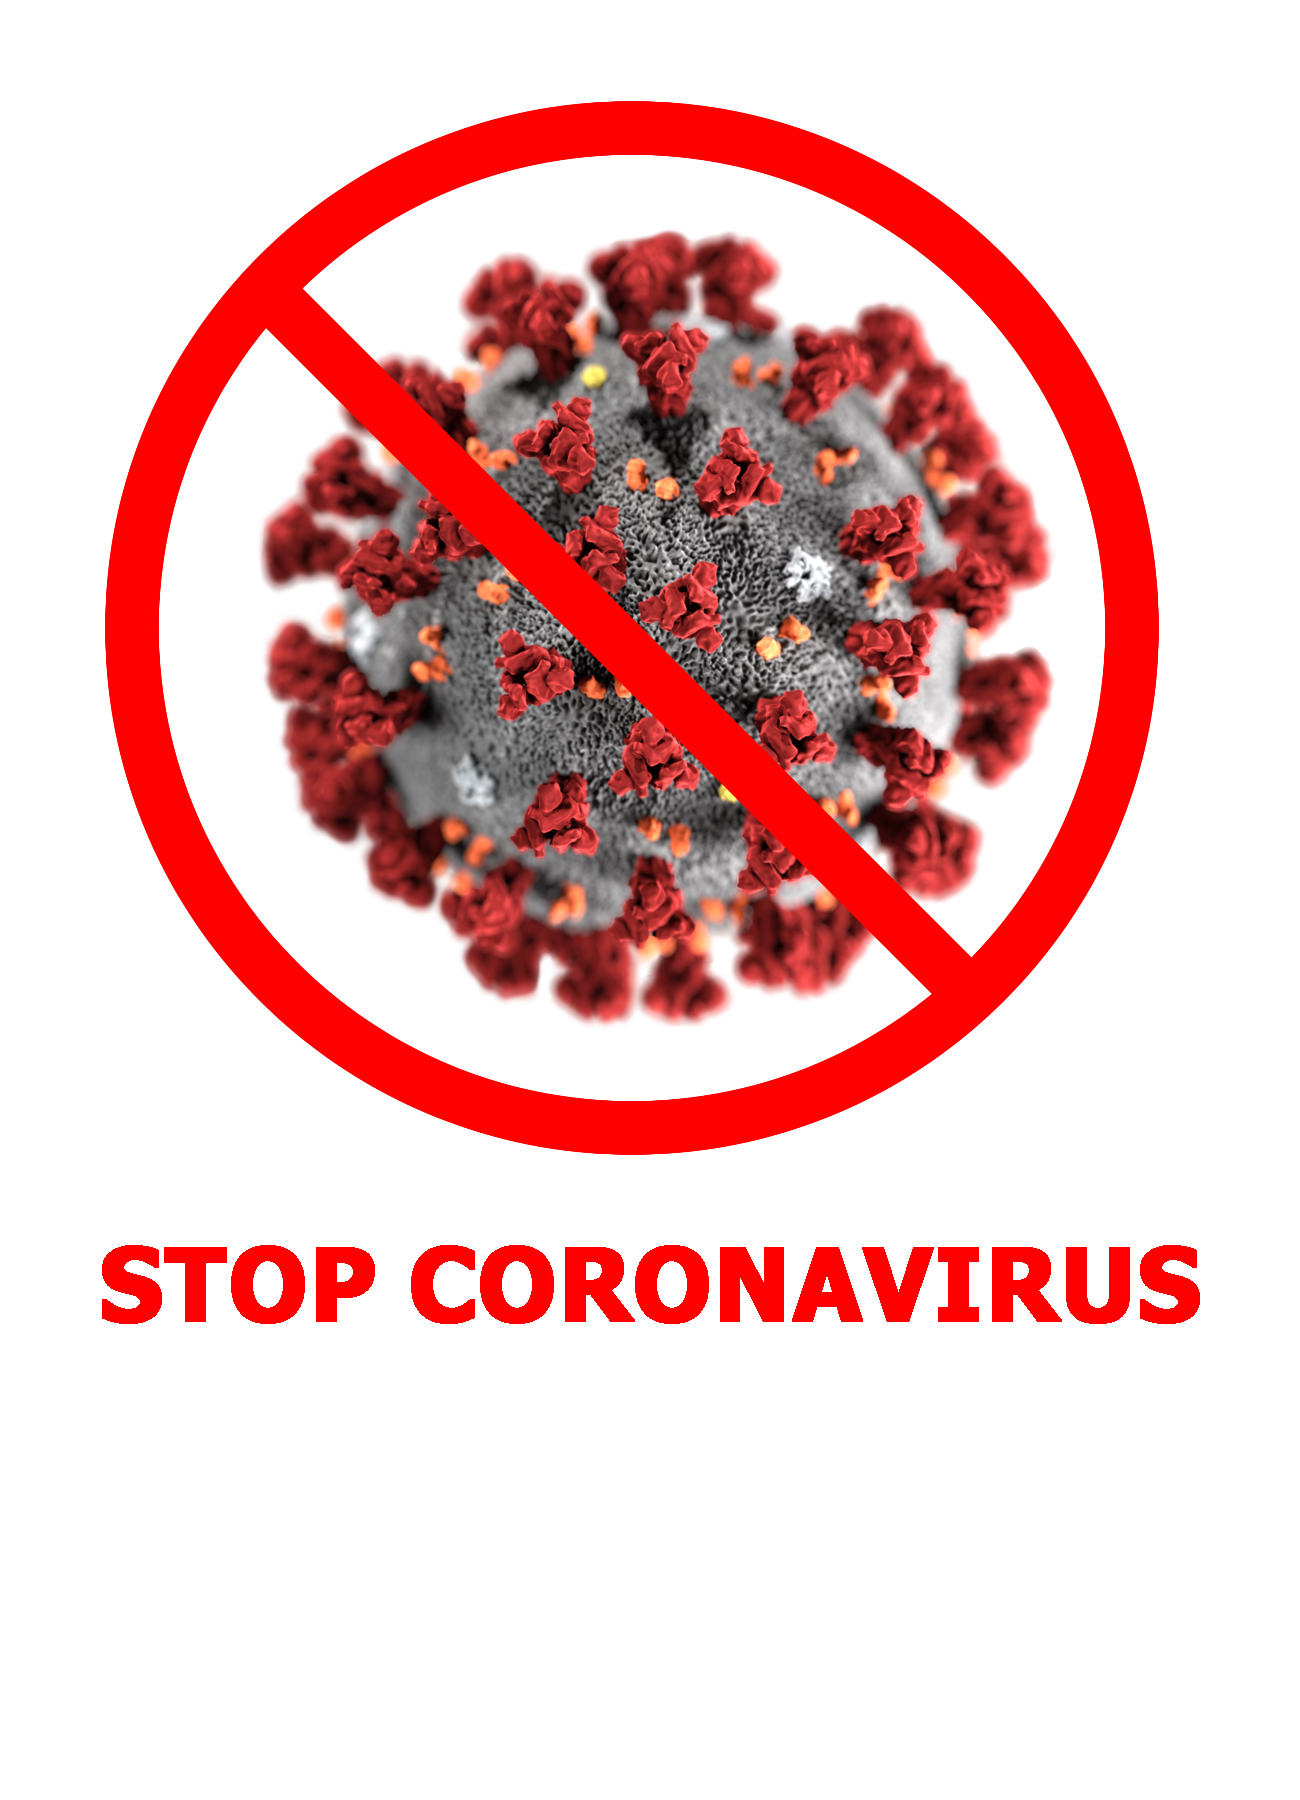 Coronavirus Stop Photos Sign Free Download Image PNG Image